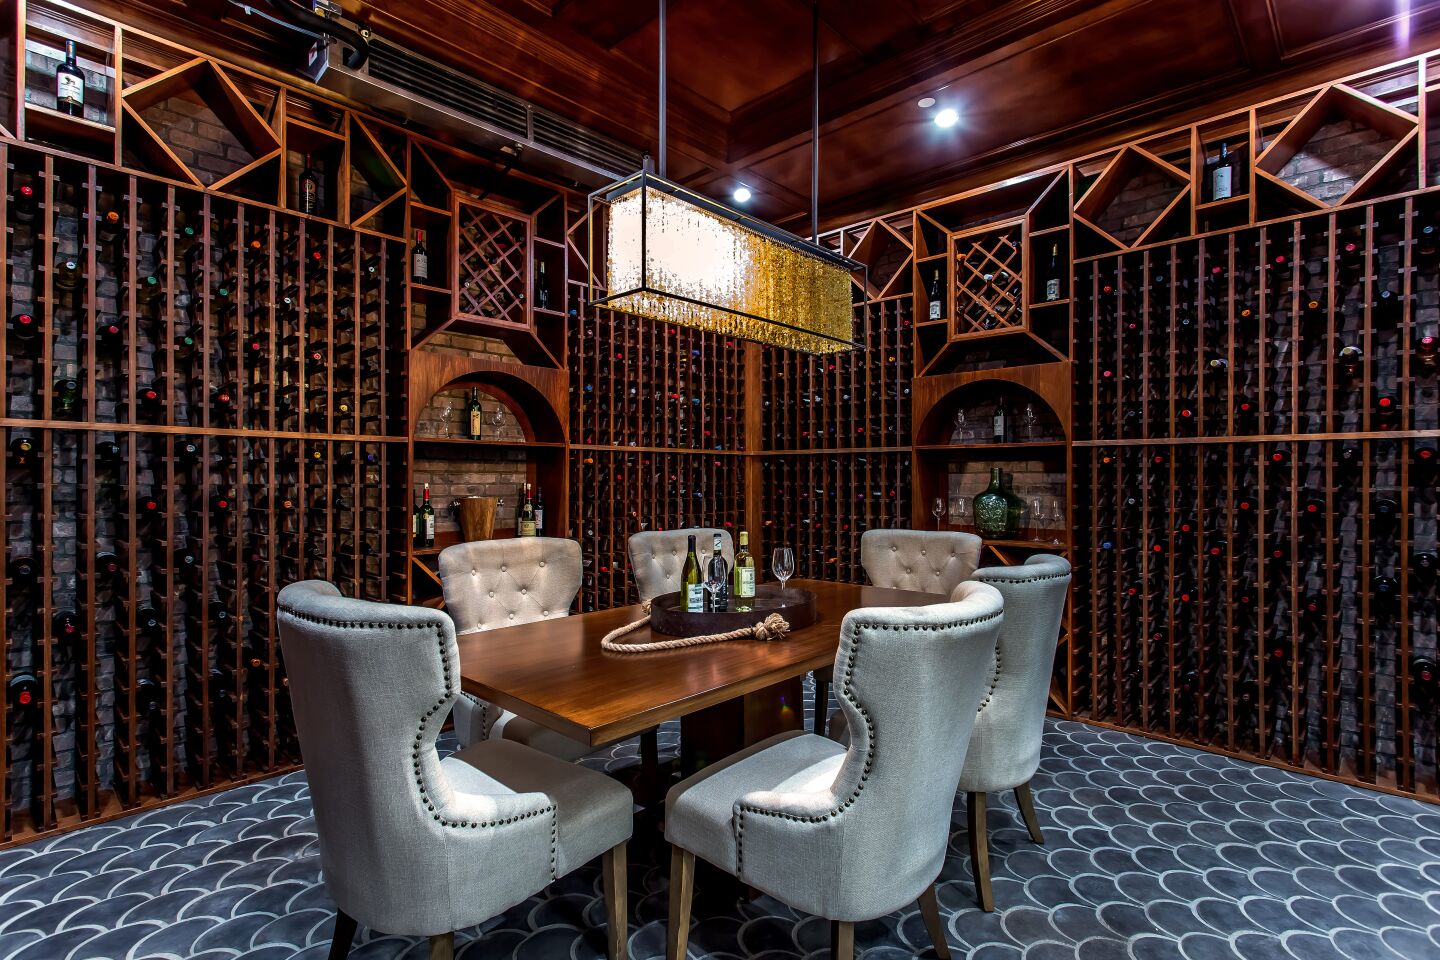 A wine cellar inside the Encino mansion.